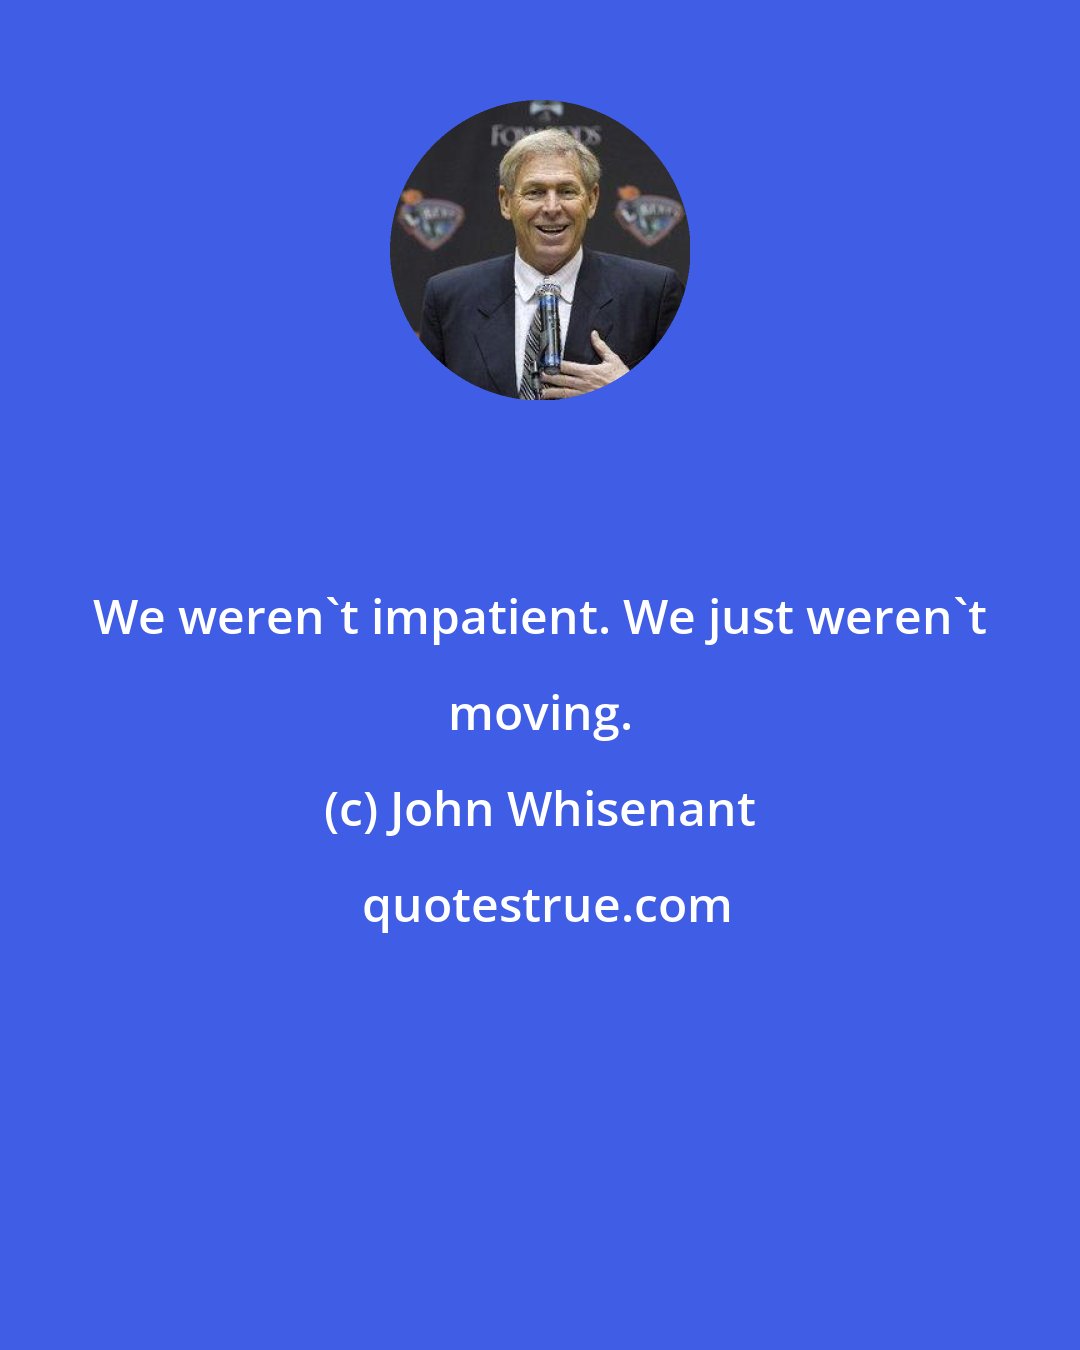 John Whisenant: We weren't impatient. We just weren't moving.